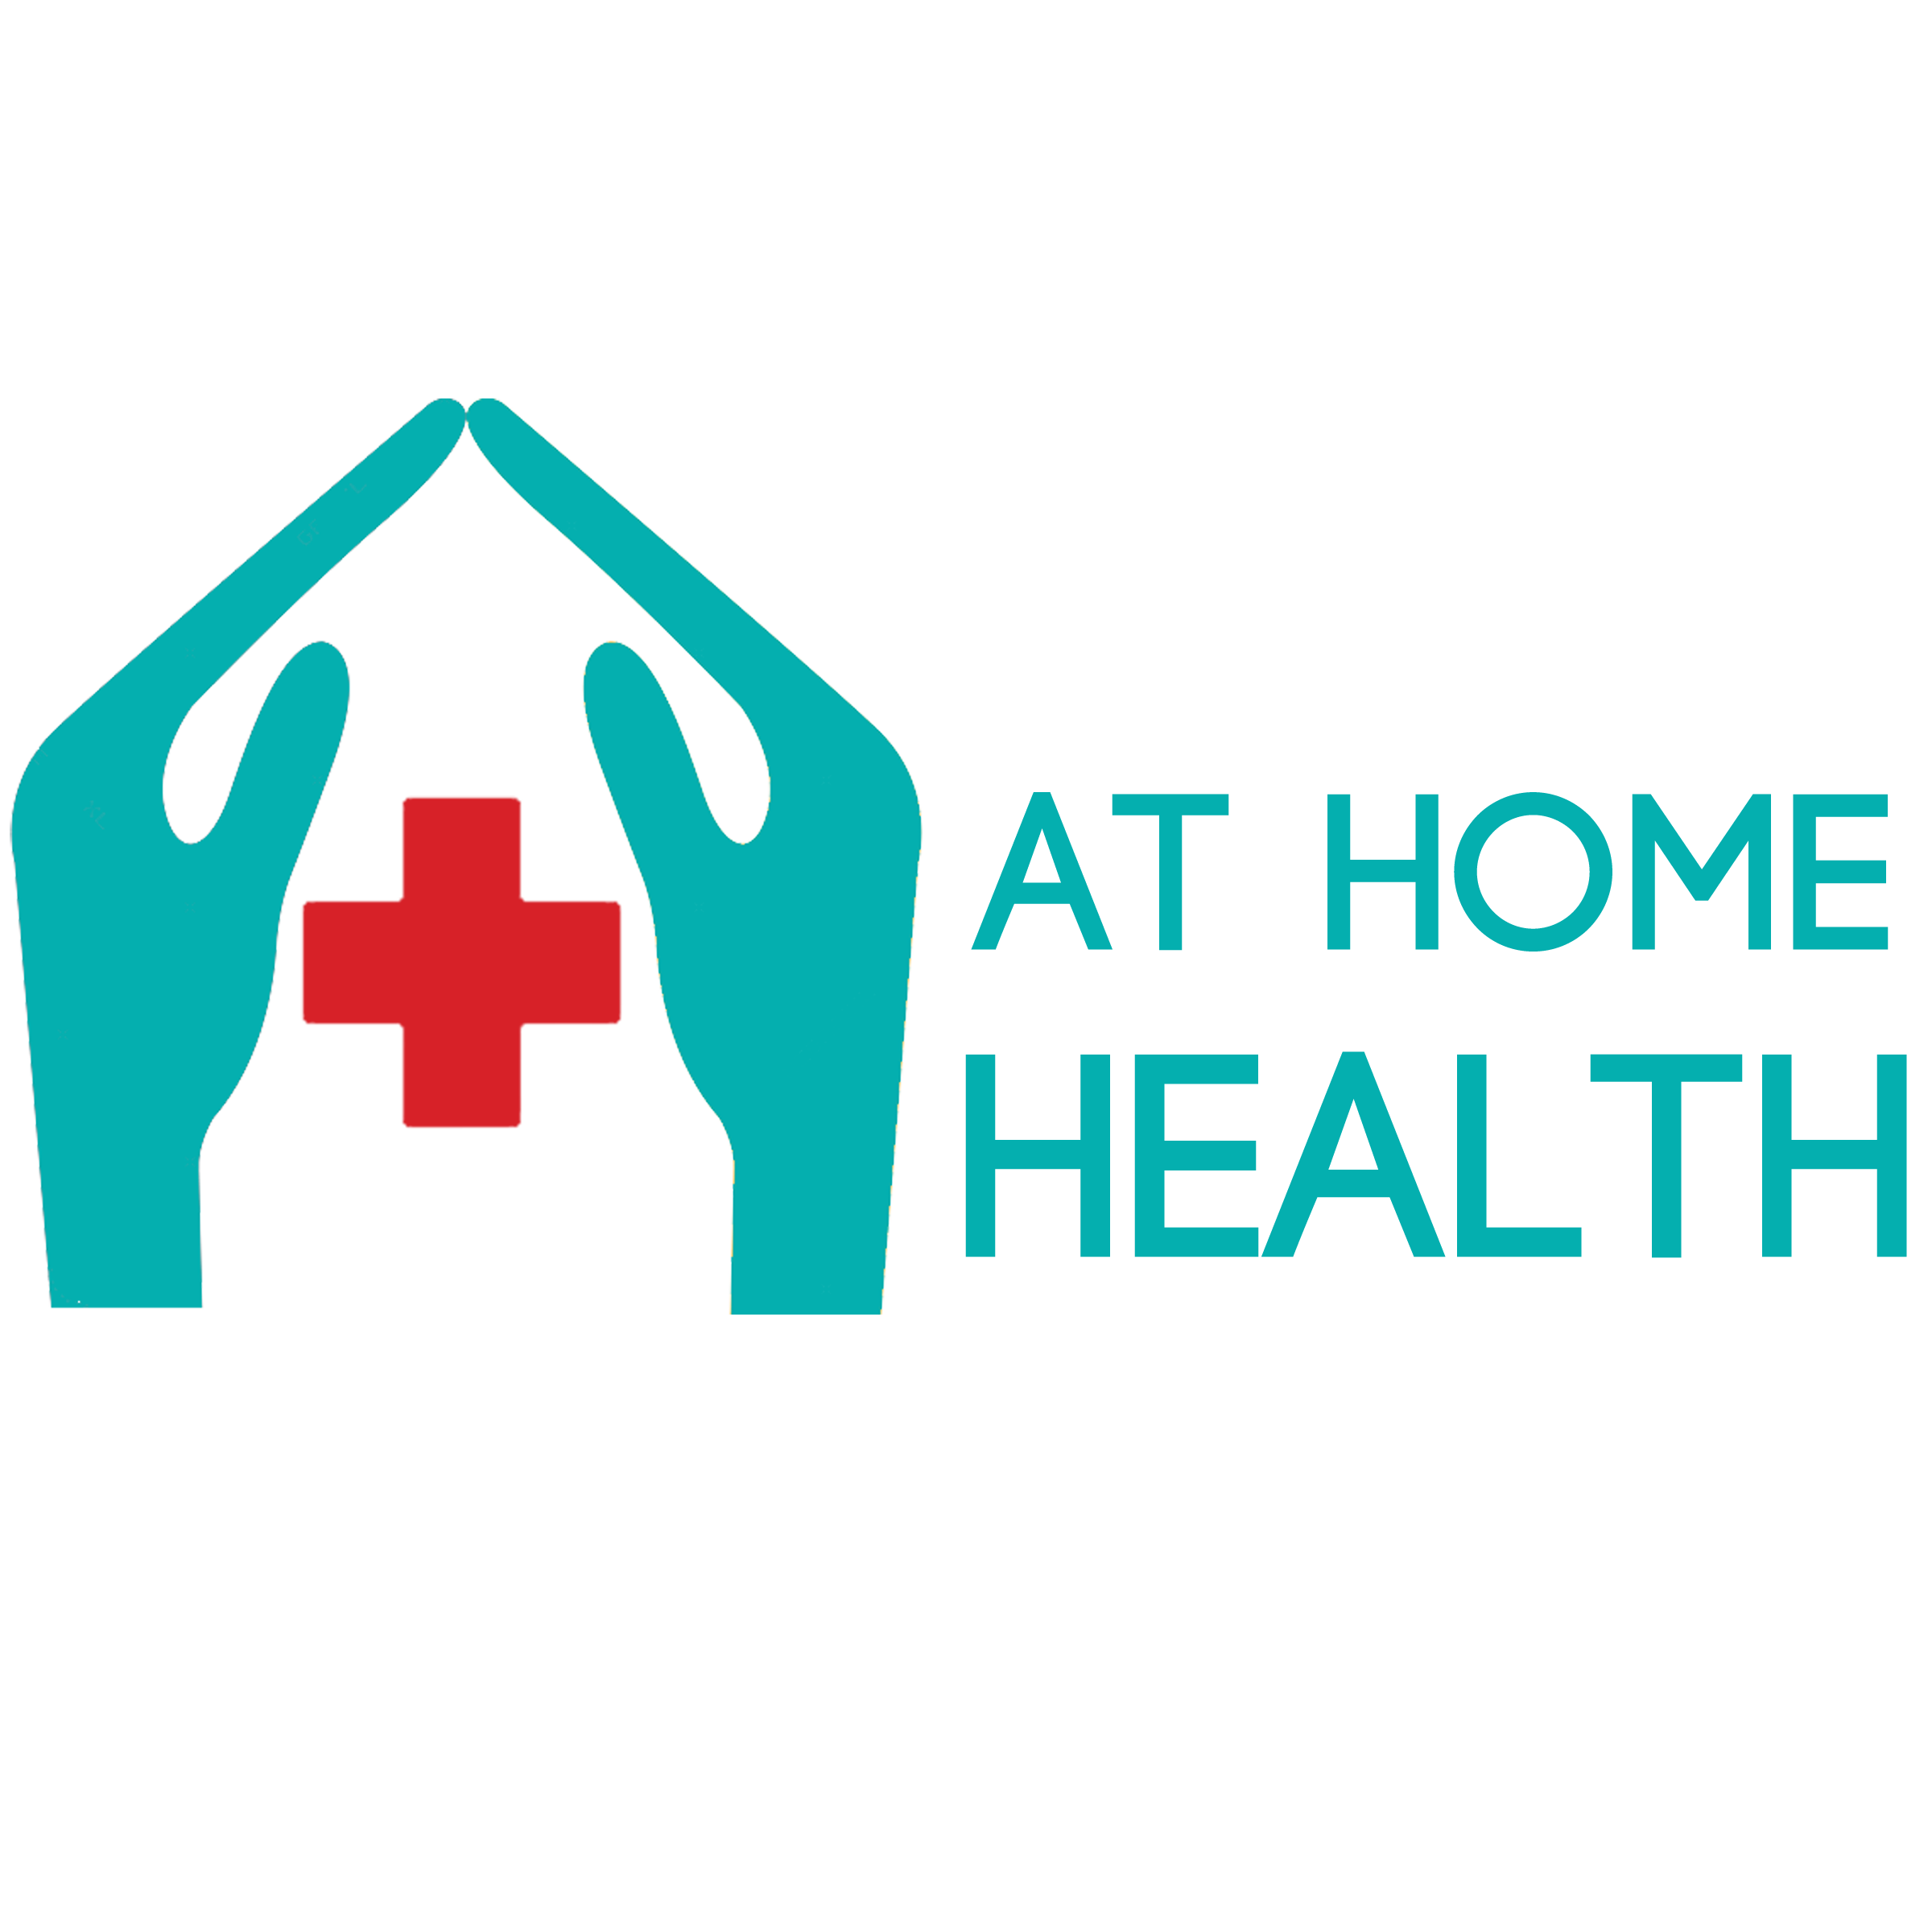 At Home Health